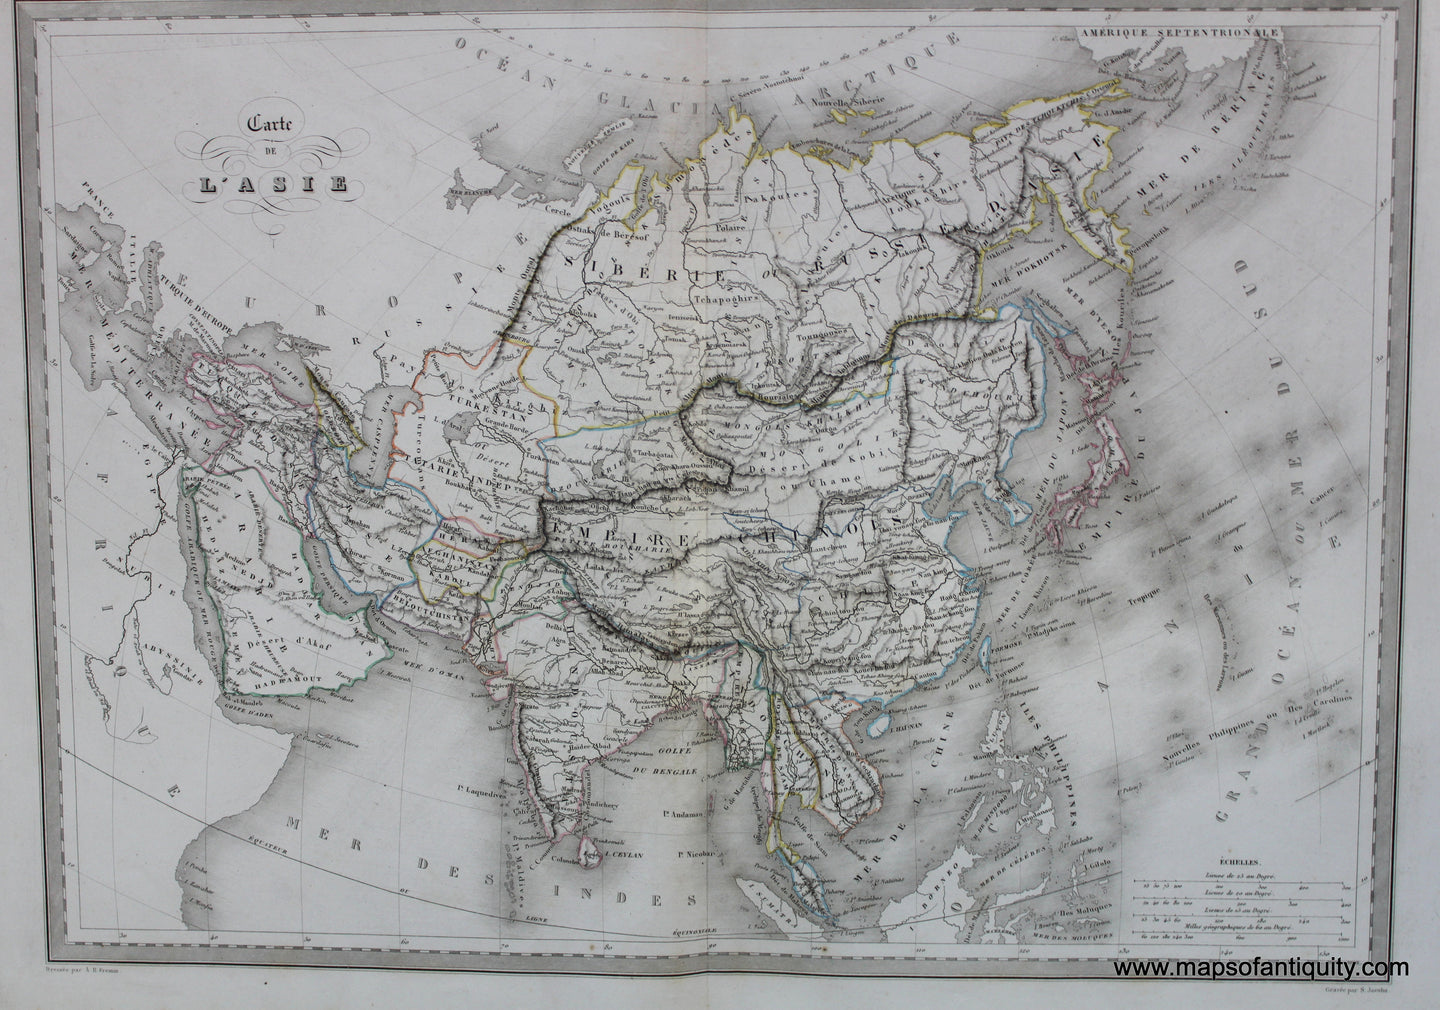 Antique-Hand-Colored-Map-Carte-de-L'Asie-Asia-Asia-General-1846-M.-Malte-Brun-Maps-Of-Antiquity